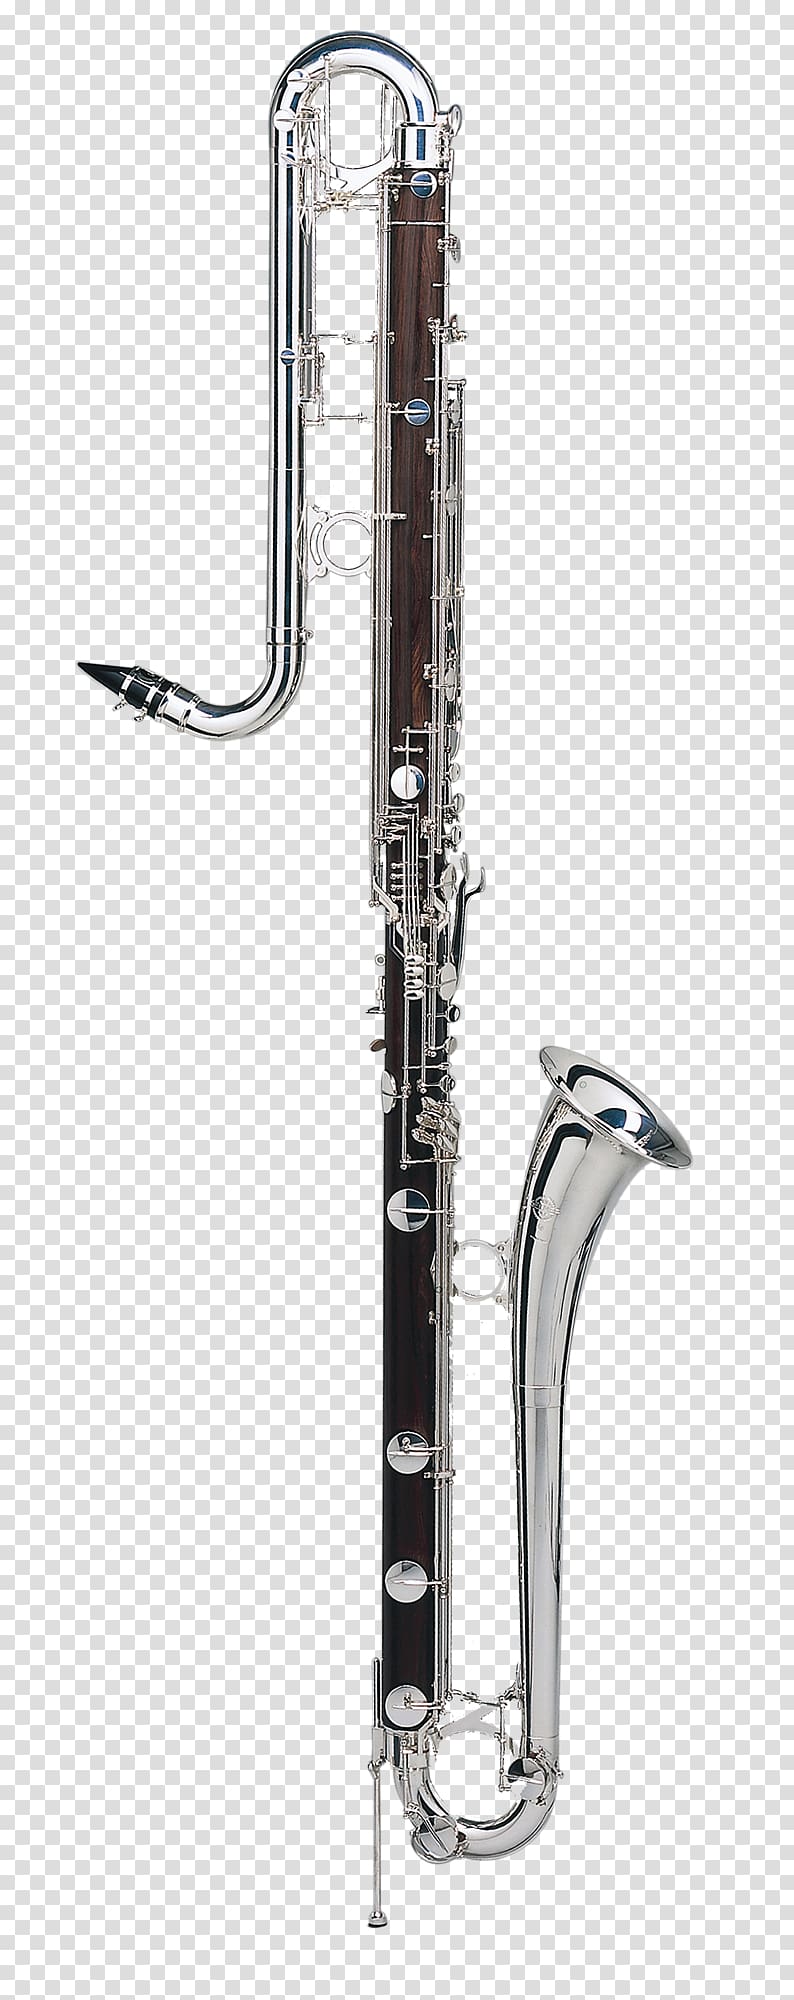 Contrabass clarinet Henri Selmer Paris Musical Instruments, musical instruments transparent background PNG clipart